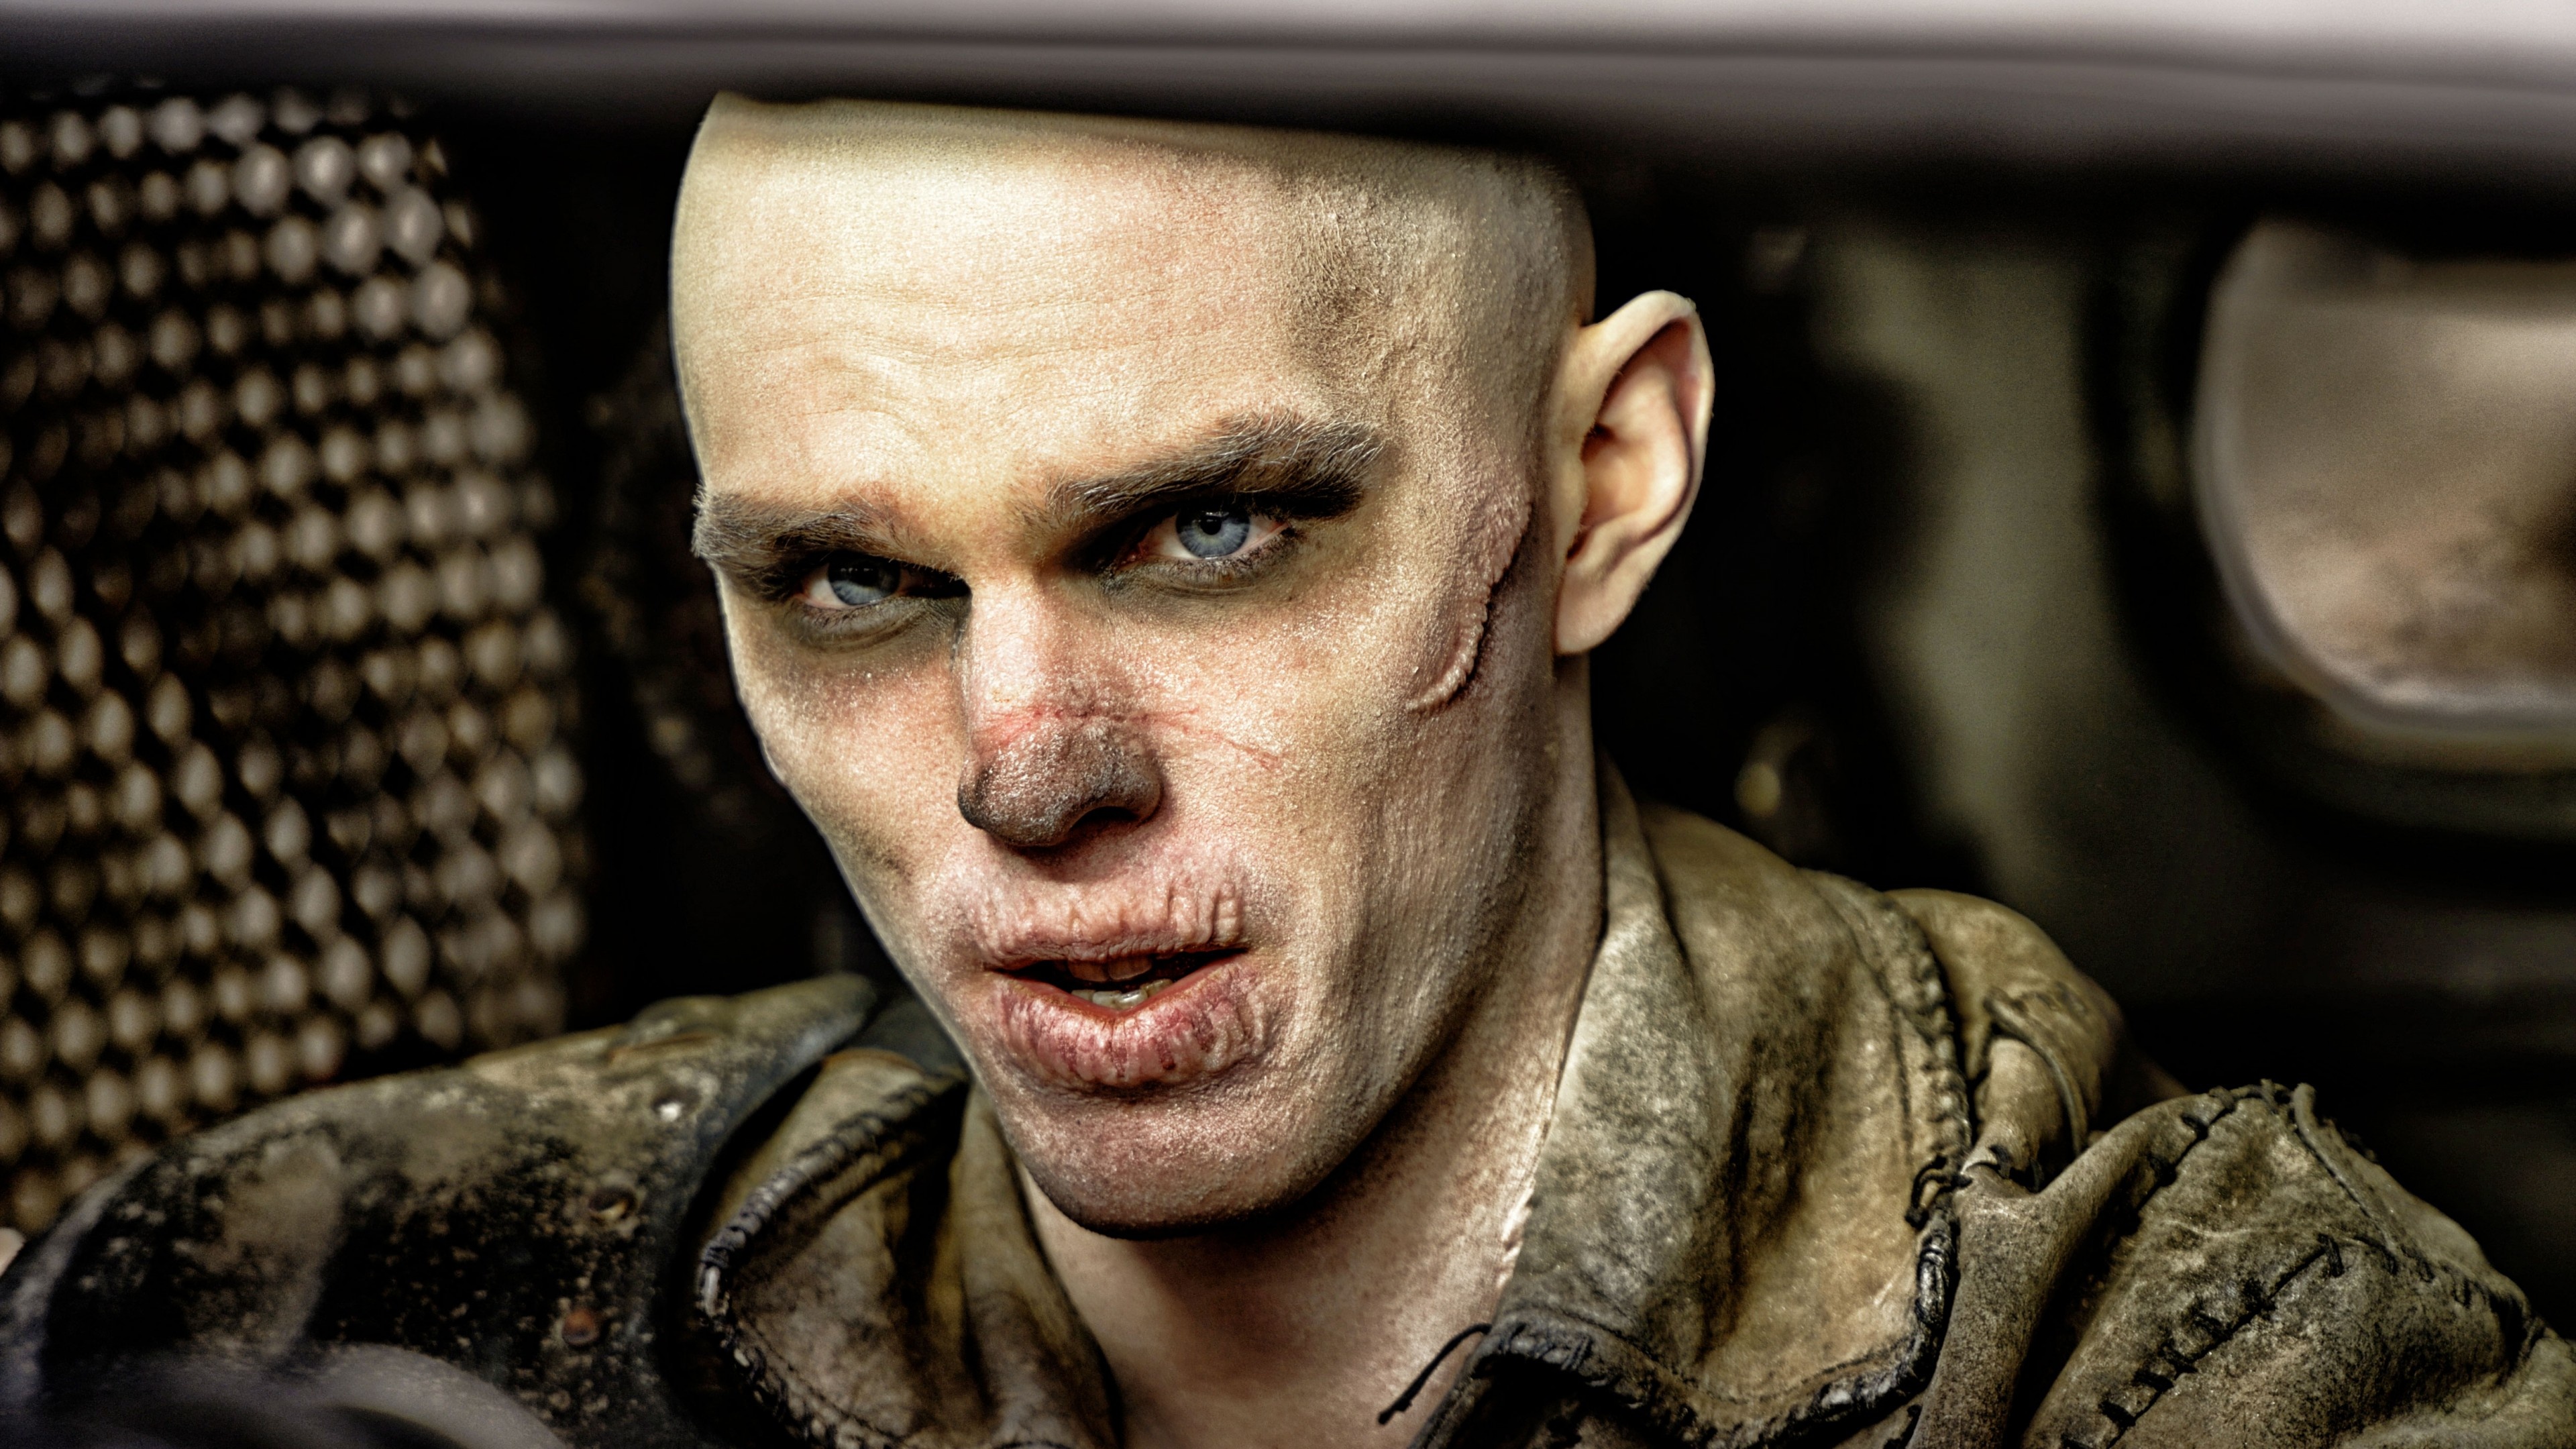 Mad Max: Fury Road: Nicholas Hoult as Nux, Action film. 3840x2160 4K Wallpaper.